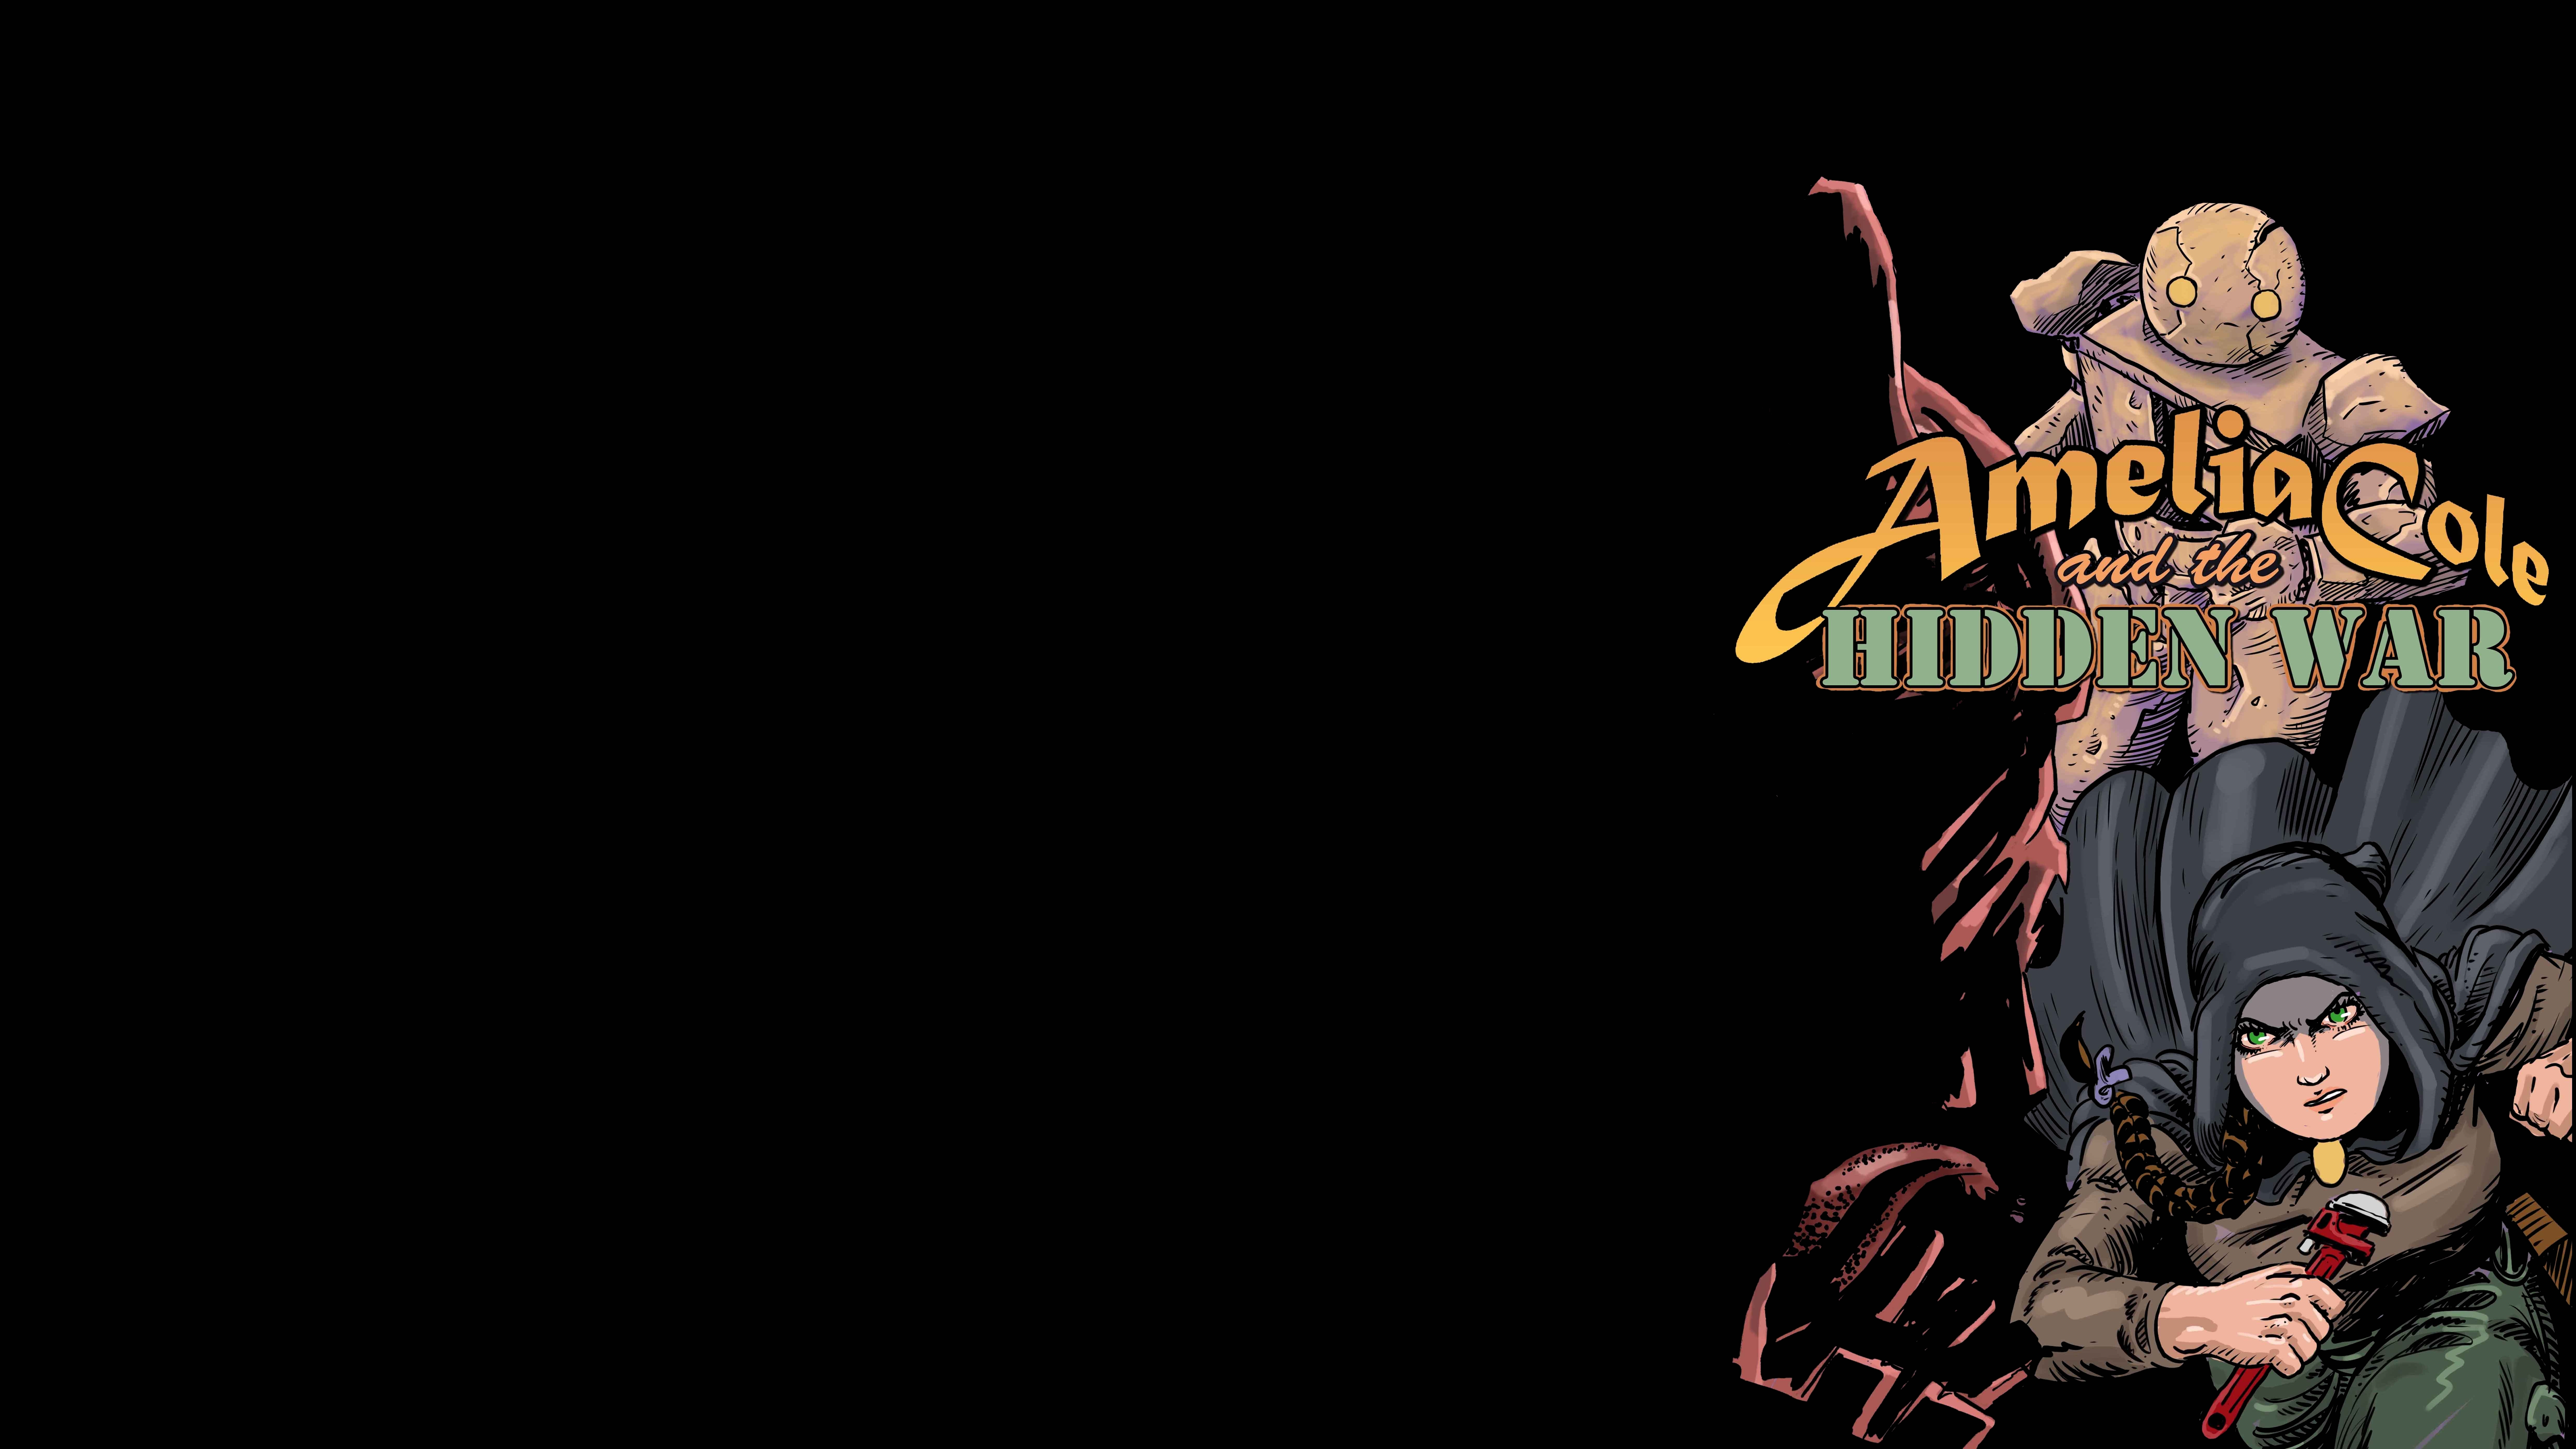 Comics Amelia Cole And The Hidden War HD Wallpaper | Background Image